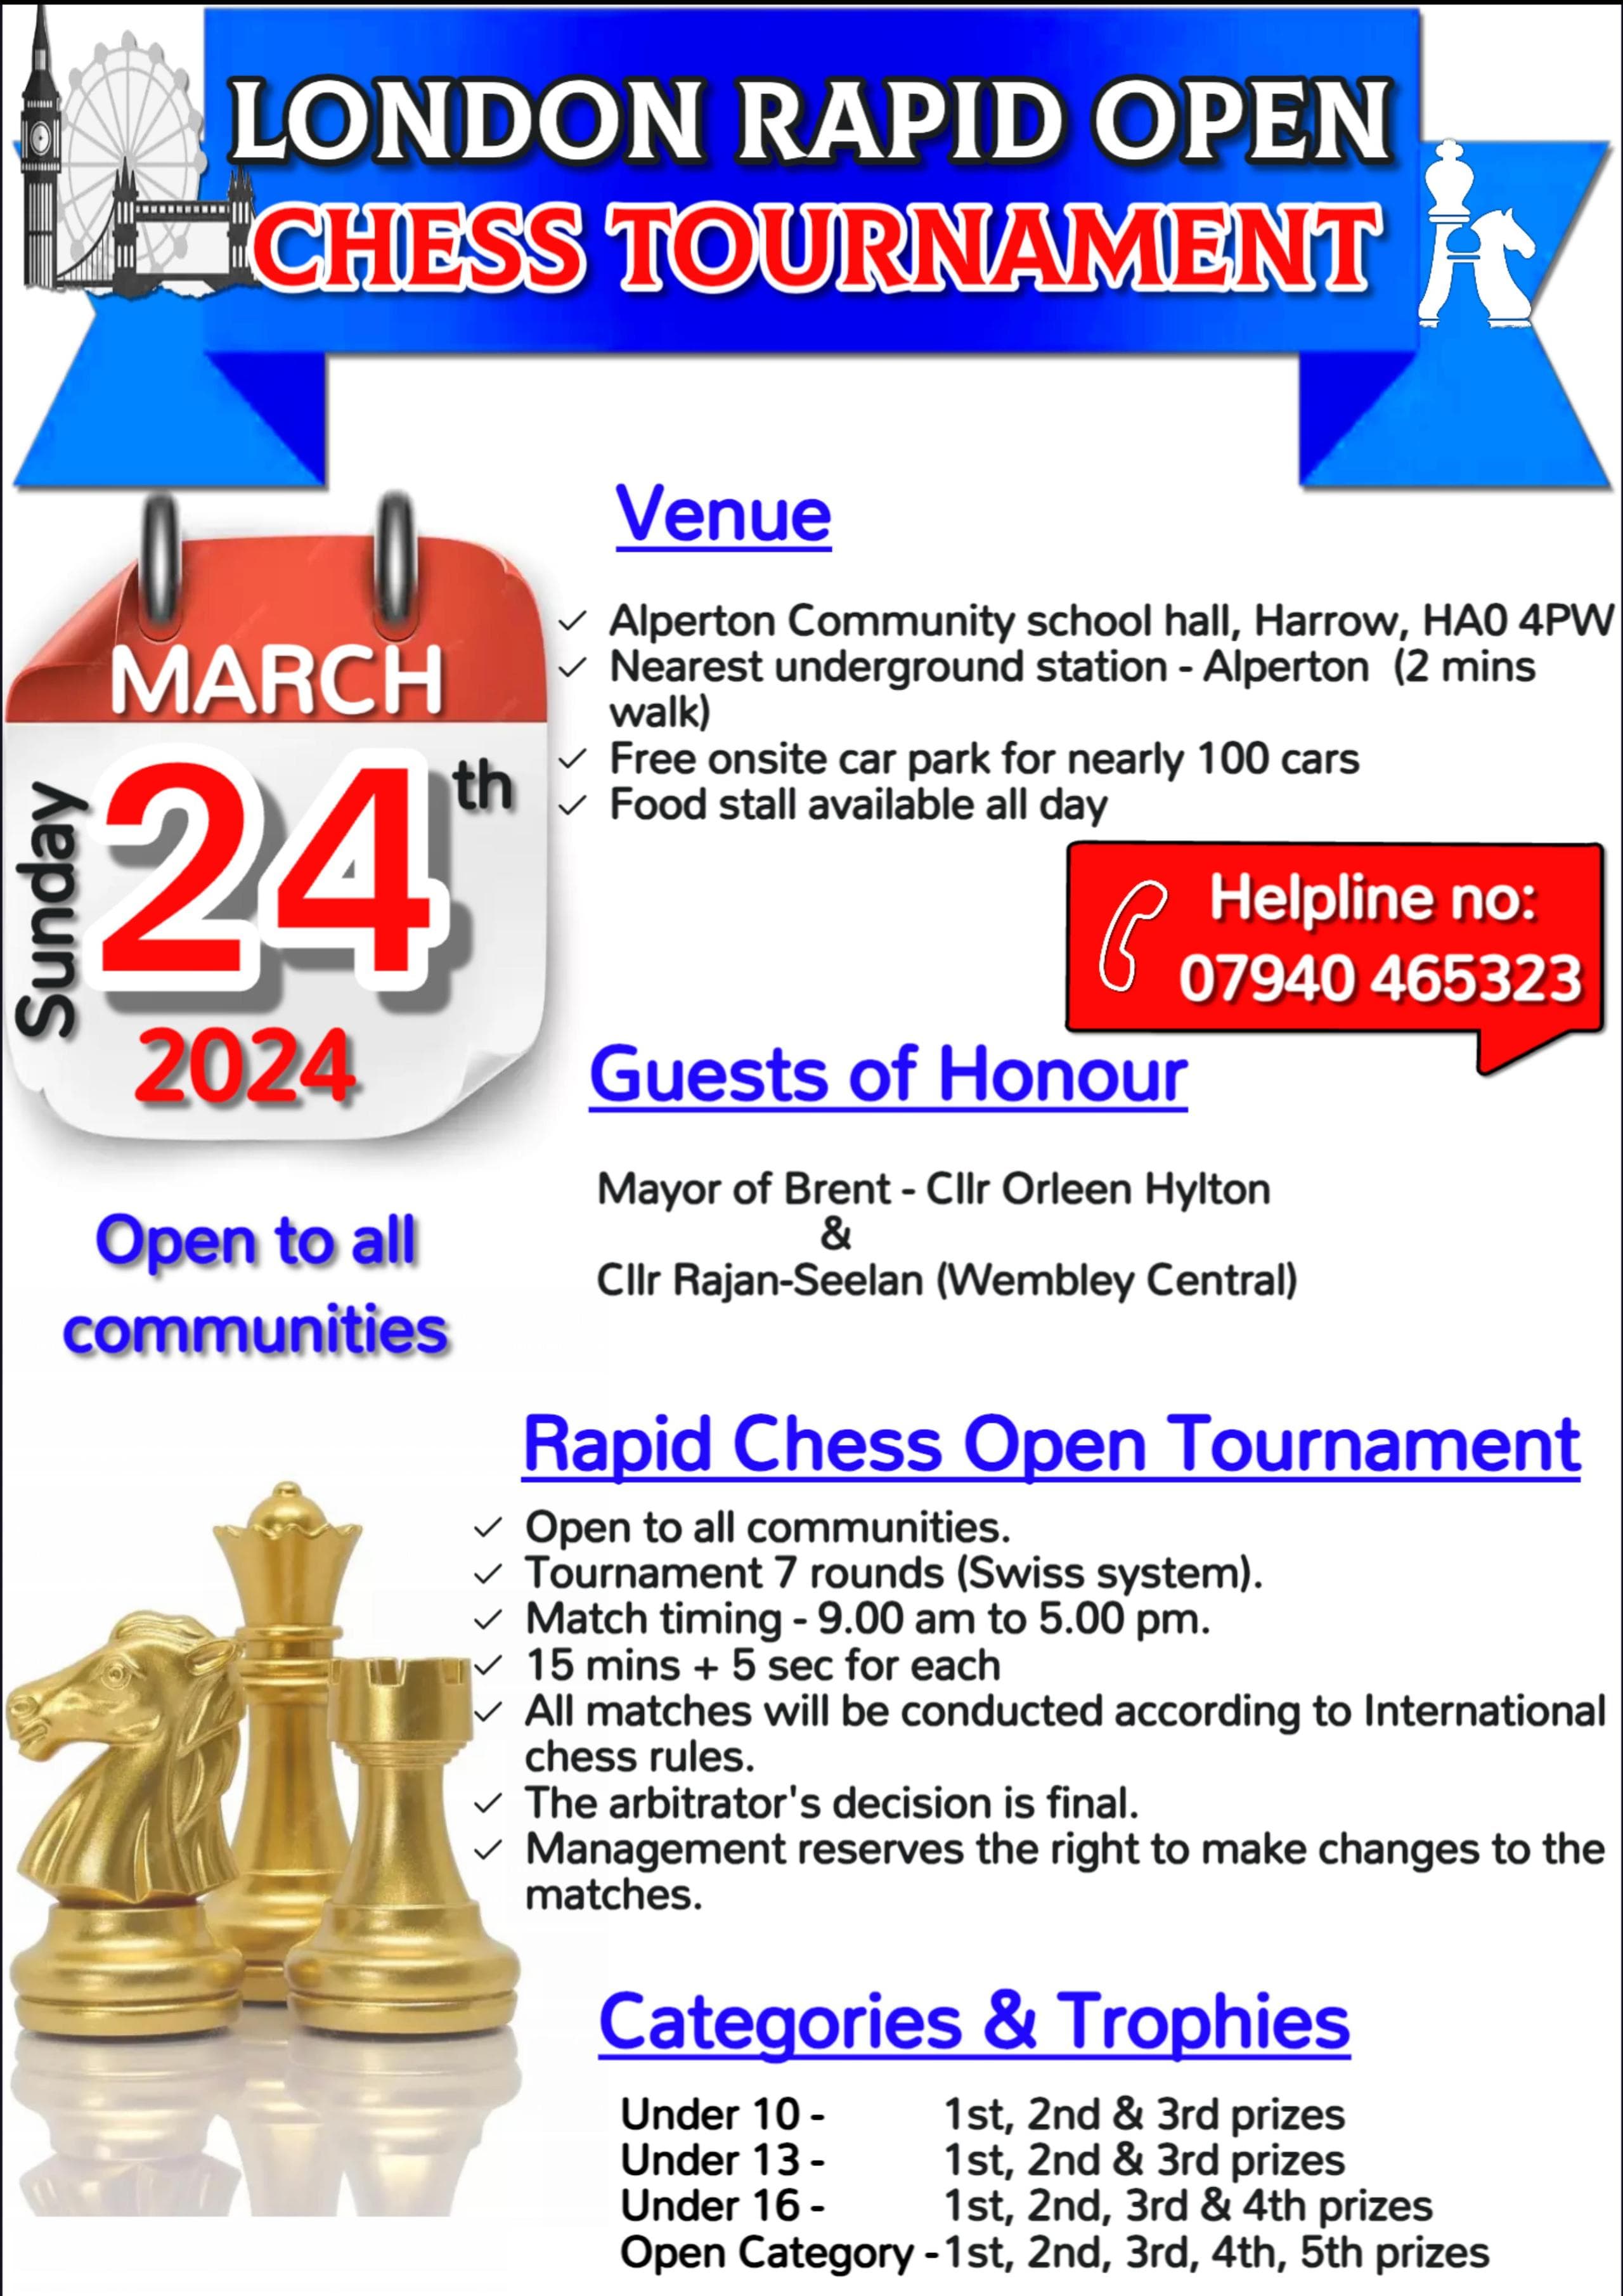 WTCF, London rapid chess open tournament 2024-03-24 flyer